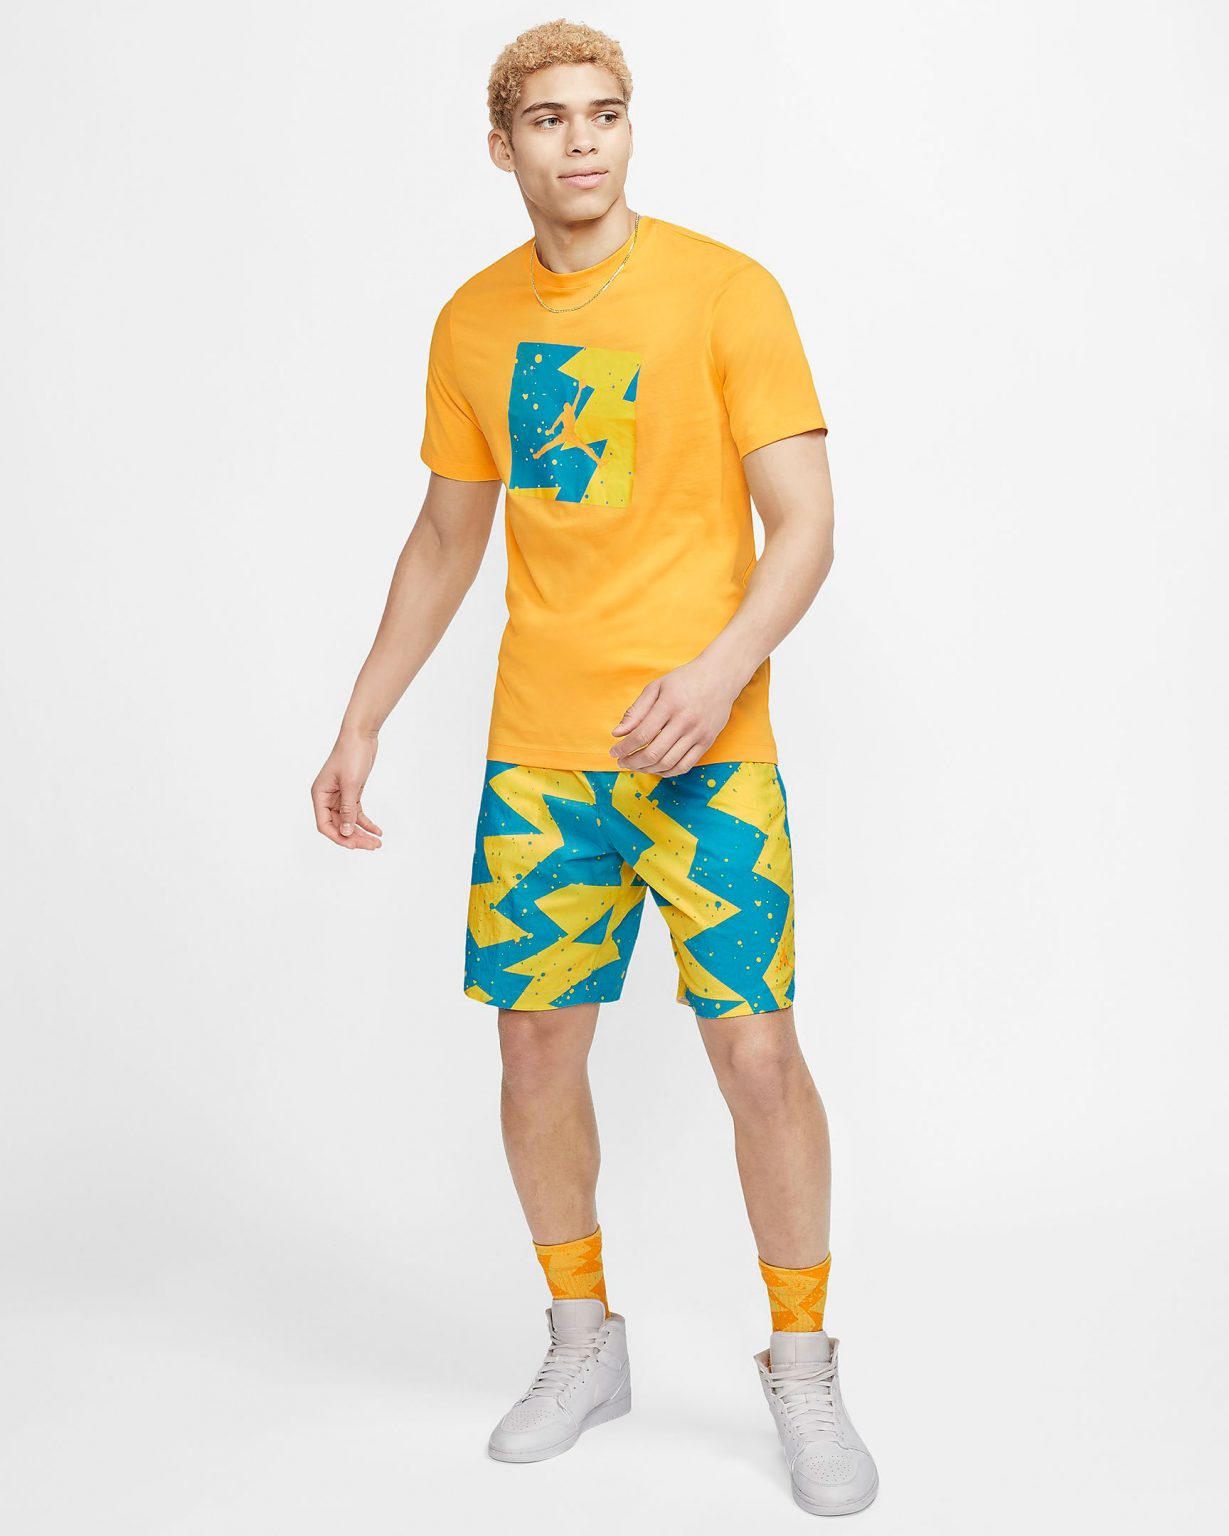 Jordan 1 Yellow Toe Clothing Shirts Match | SneakerFits.com